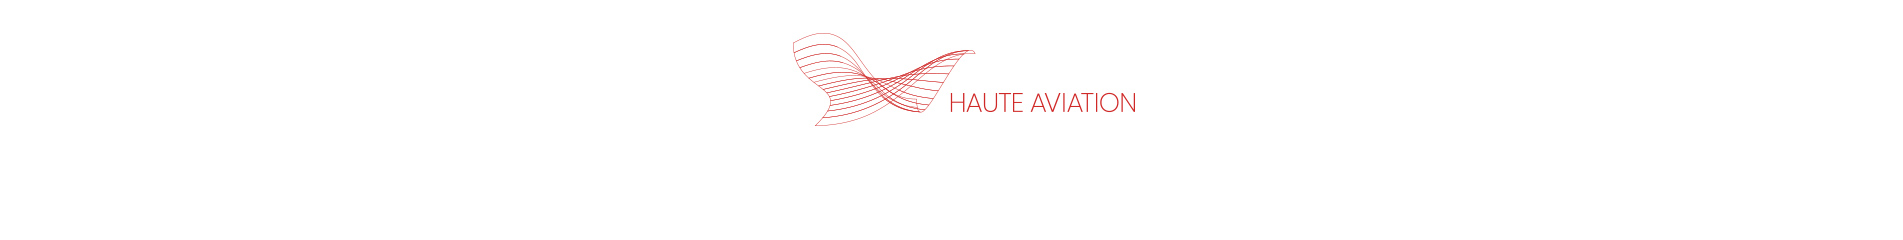 Haute Aviation | Swiss Charter Company